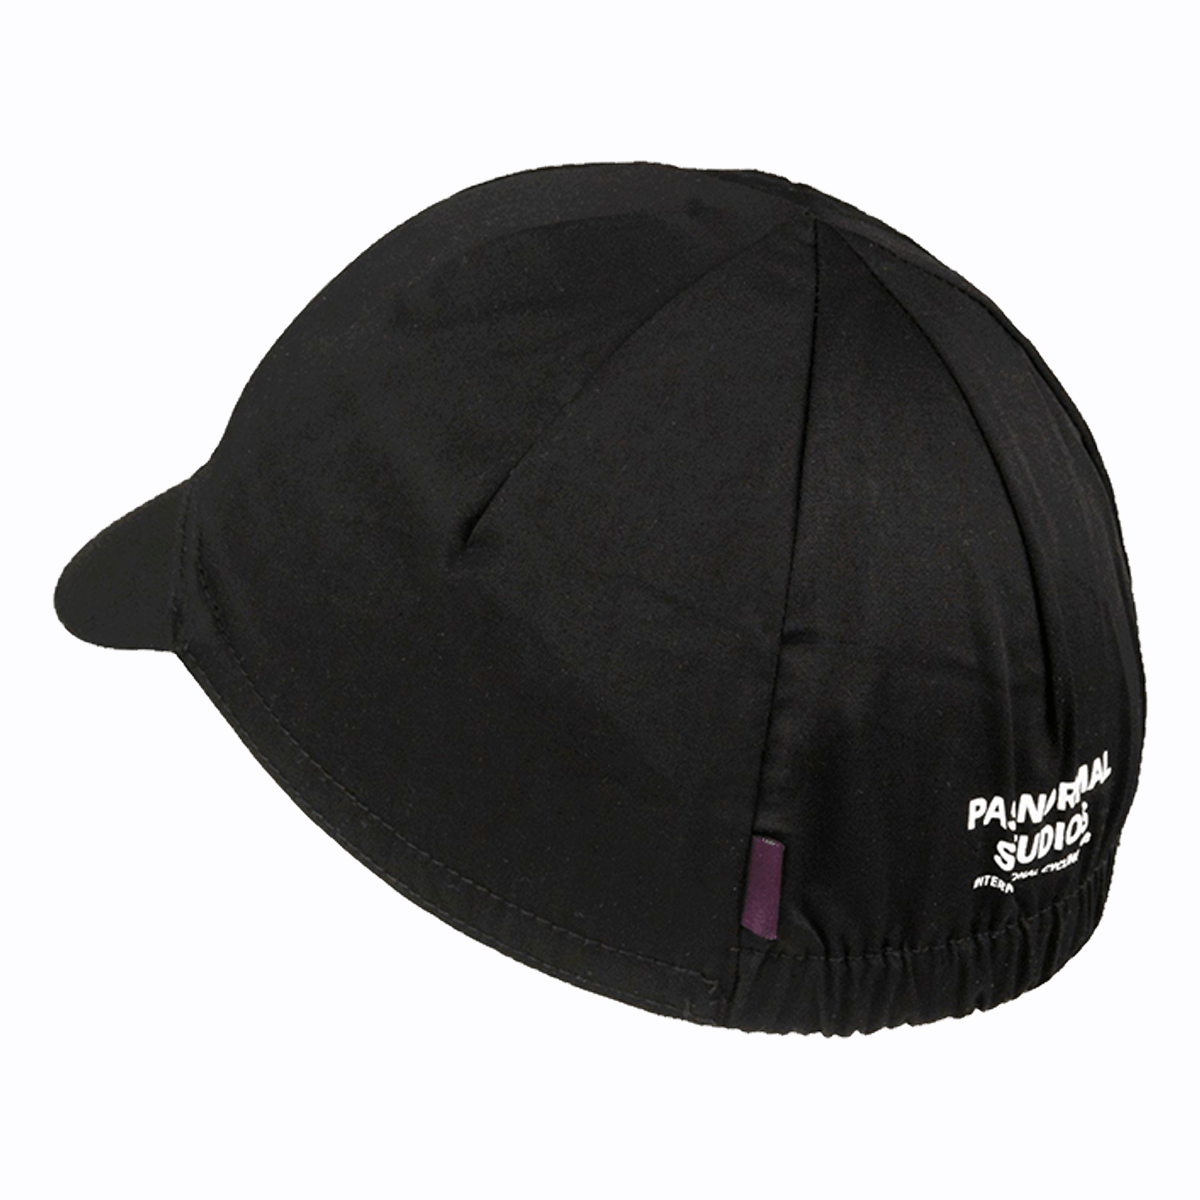 Cap - Black - One-size